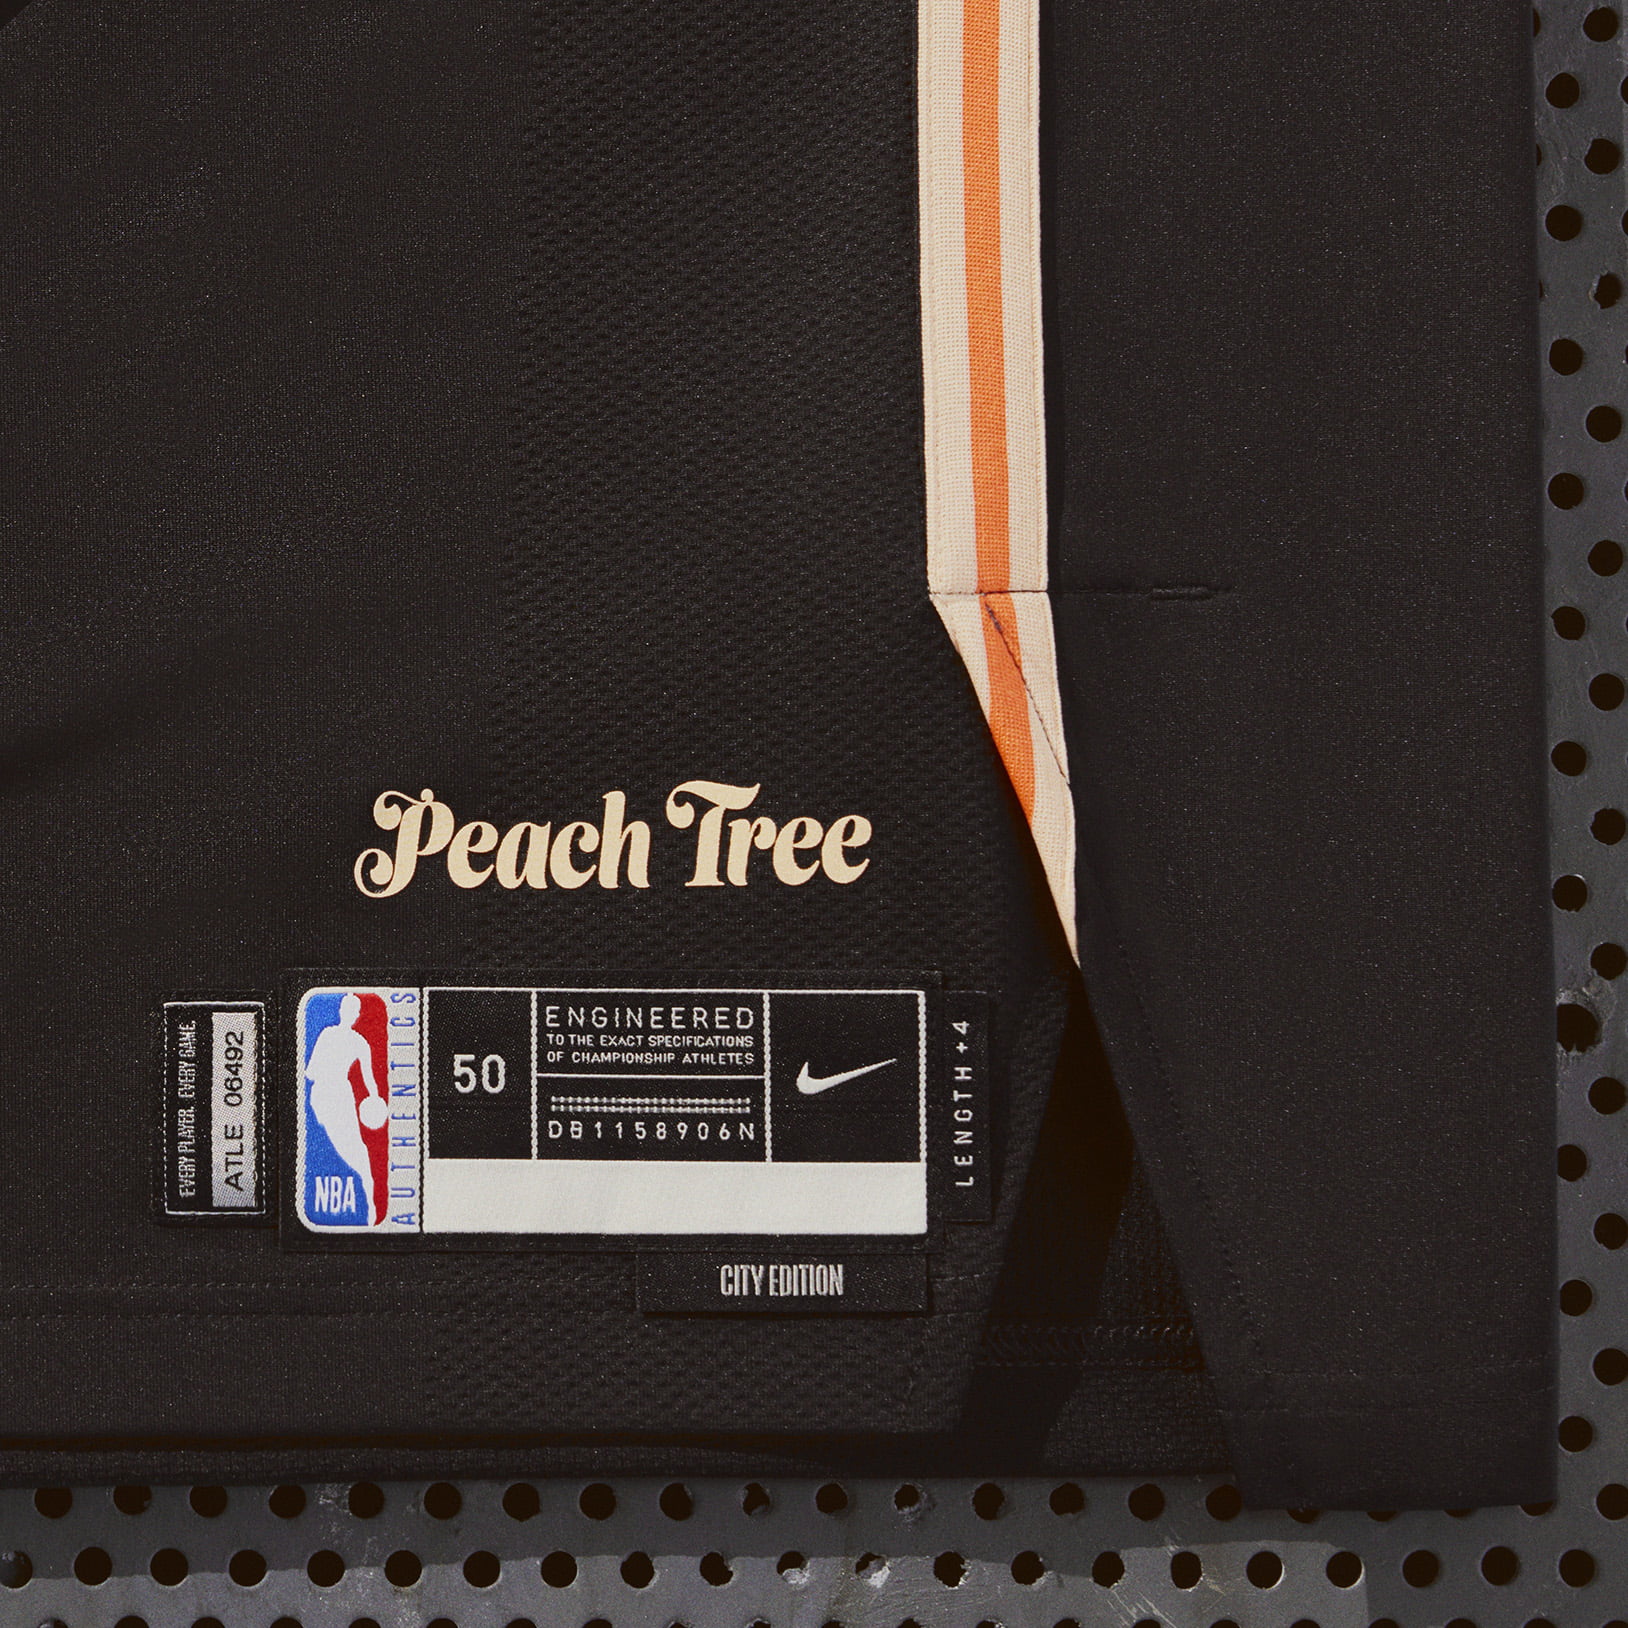 Nets 'City Edition' uniform to honor Brooklyn artist Jean-Michel